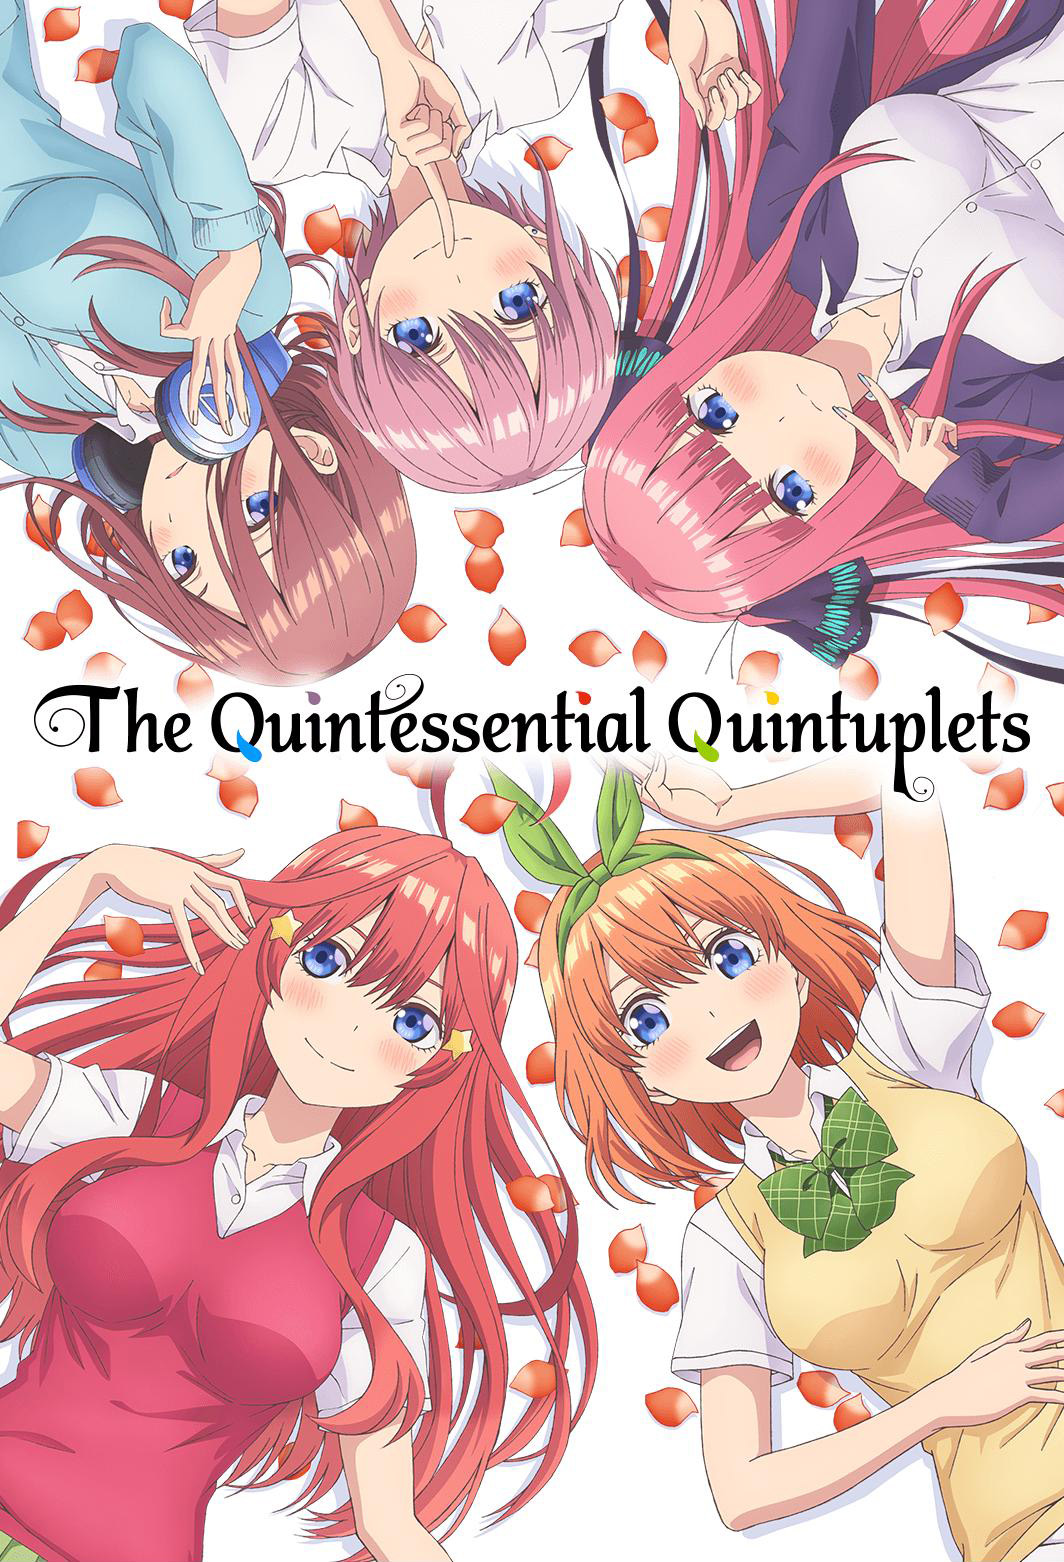 The Quintessential Quintuplets, Doblaje Wiki